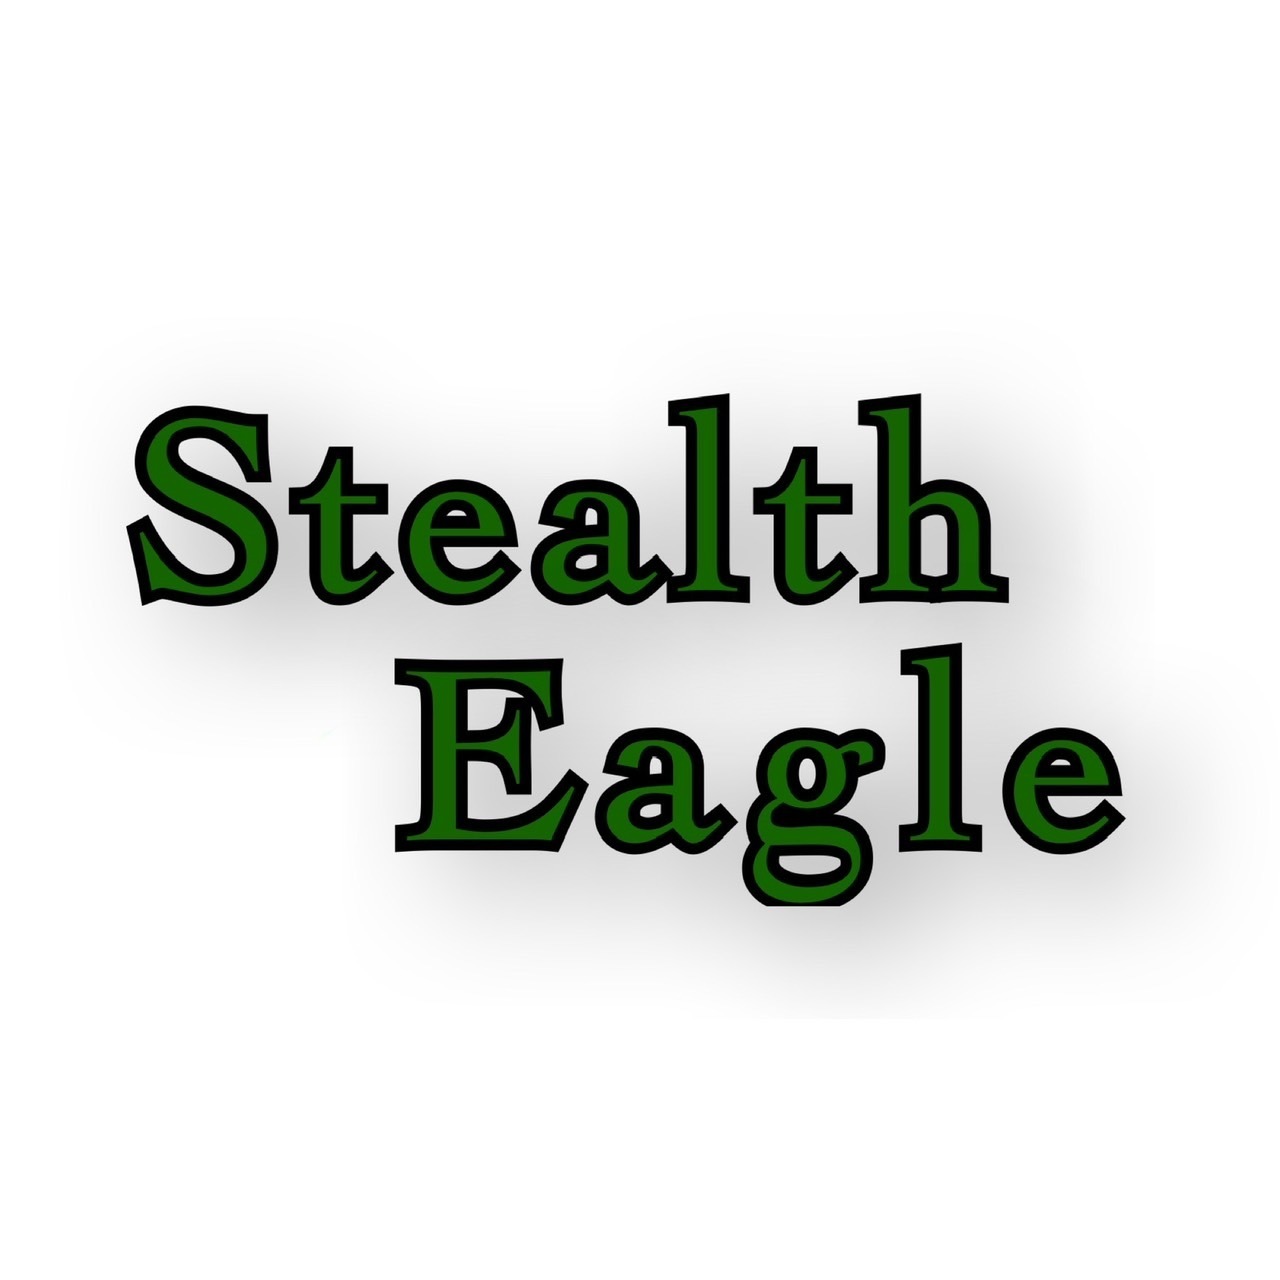 Stealth Eagle. Shop